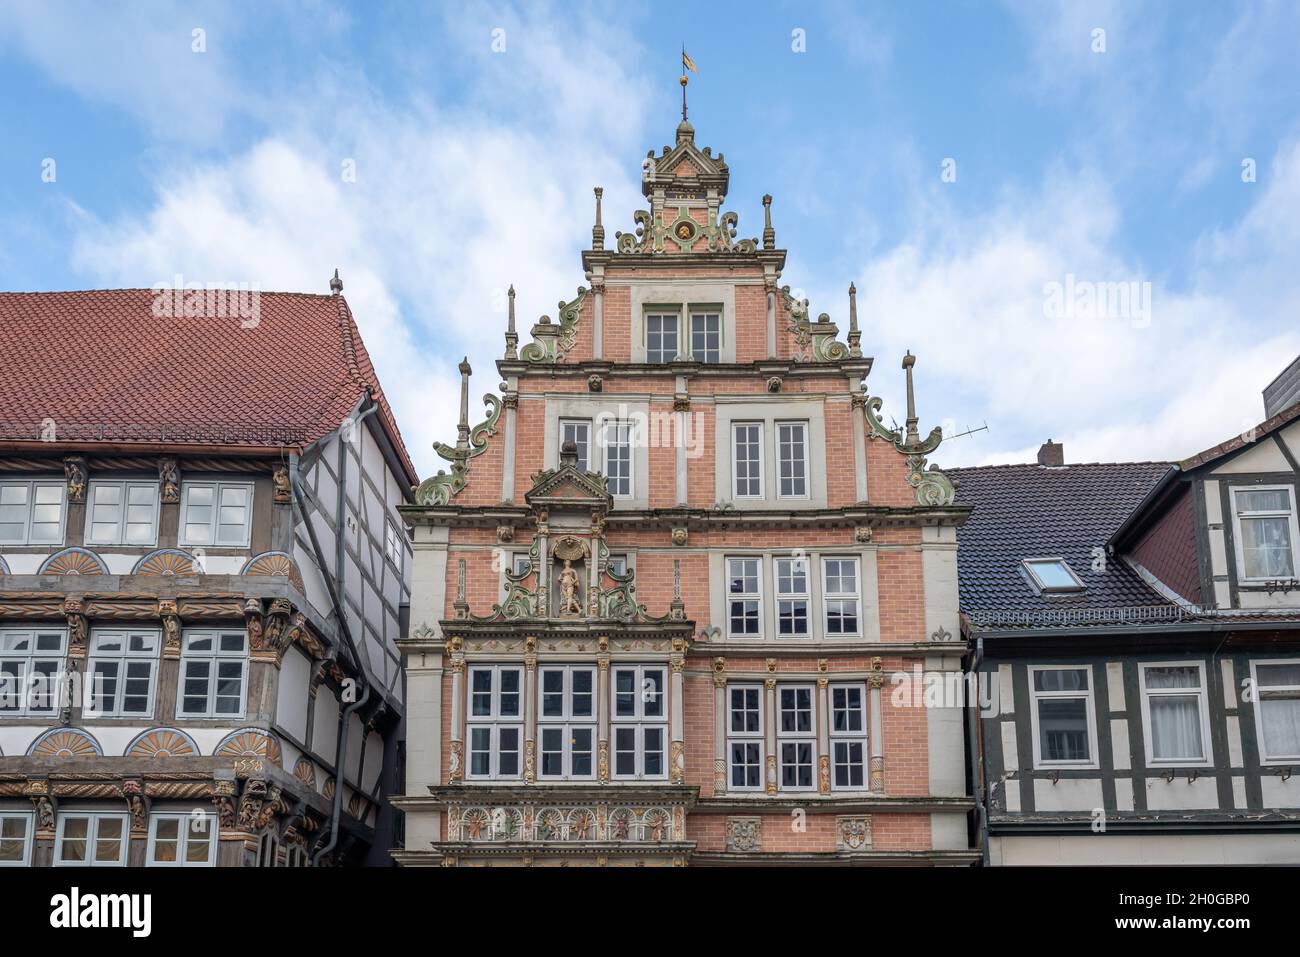 Leisthaus - house in Weser Renaissance style - Hamelin, Lower Saxony, Germany Stock Photo